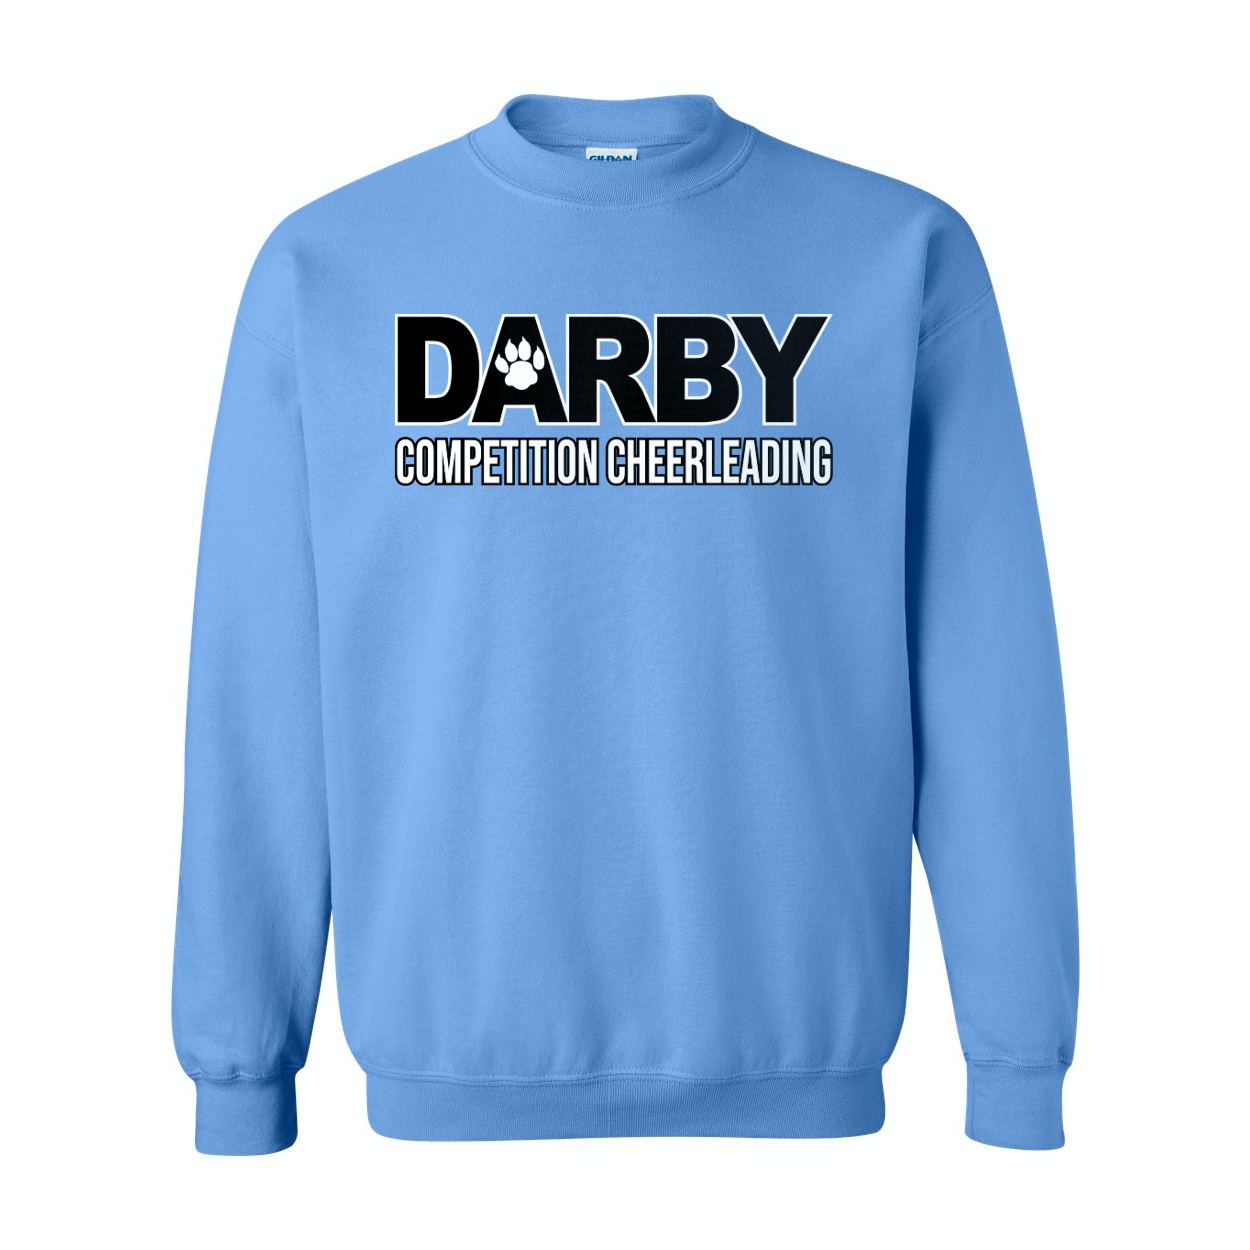 Darby Comp Cheerleading Crewneck Sweatshirt